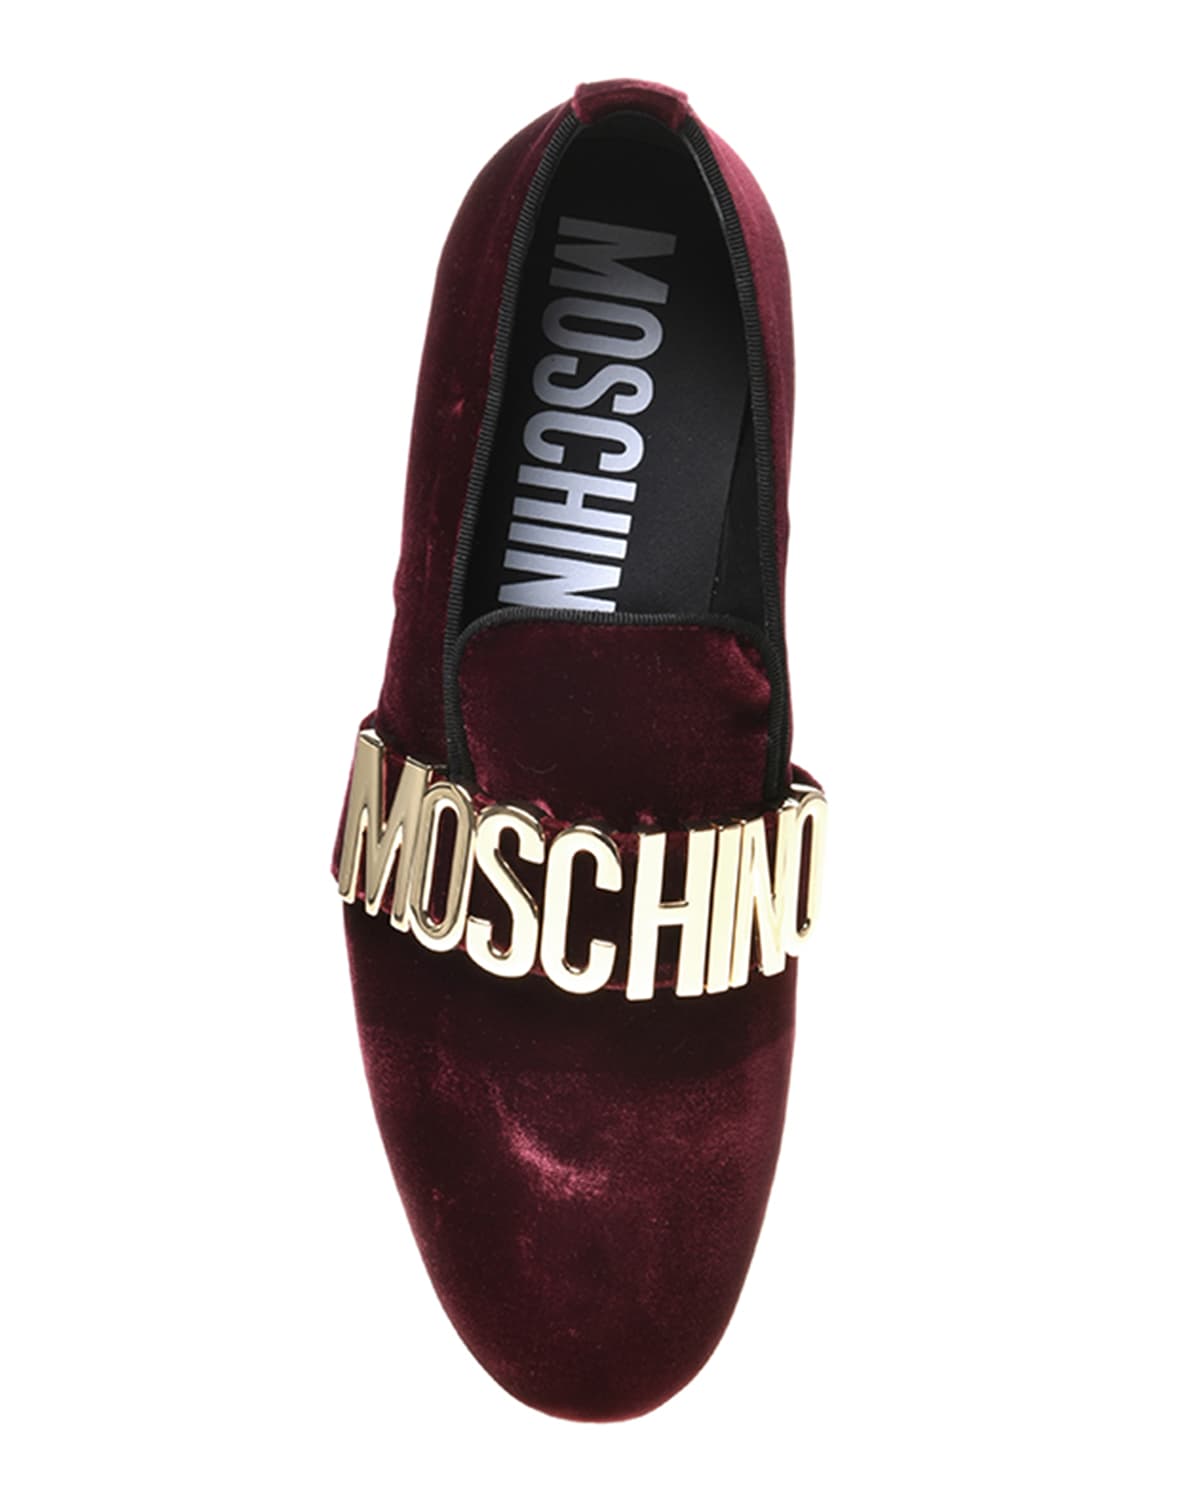 Moschino Men's Metal Logo Velvet Smoking Slippers